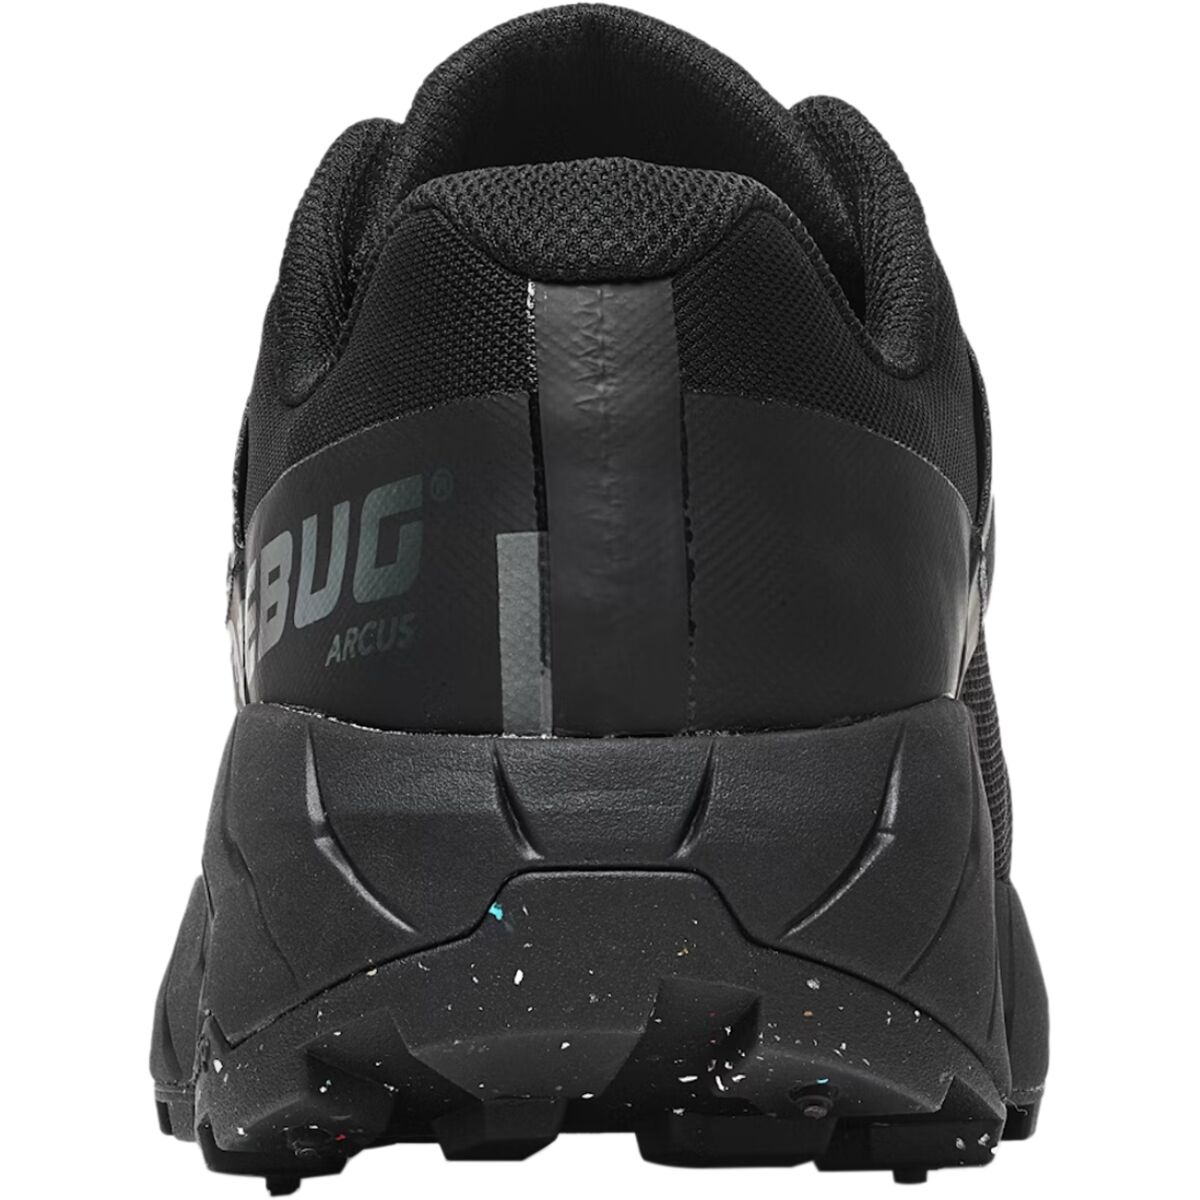 Icebug Arcus BUGrip GTX Shoe - Men's - Footwear